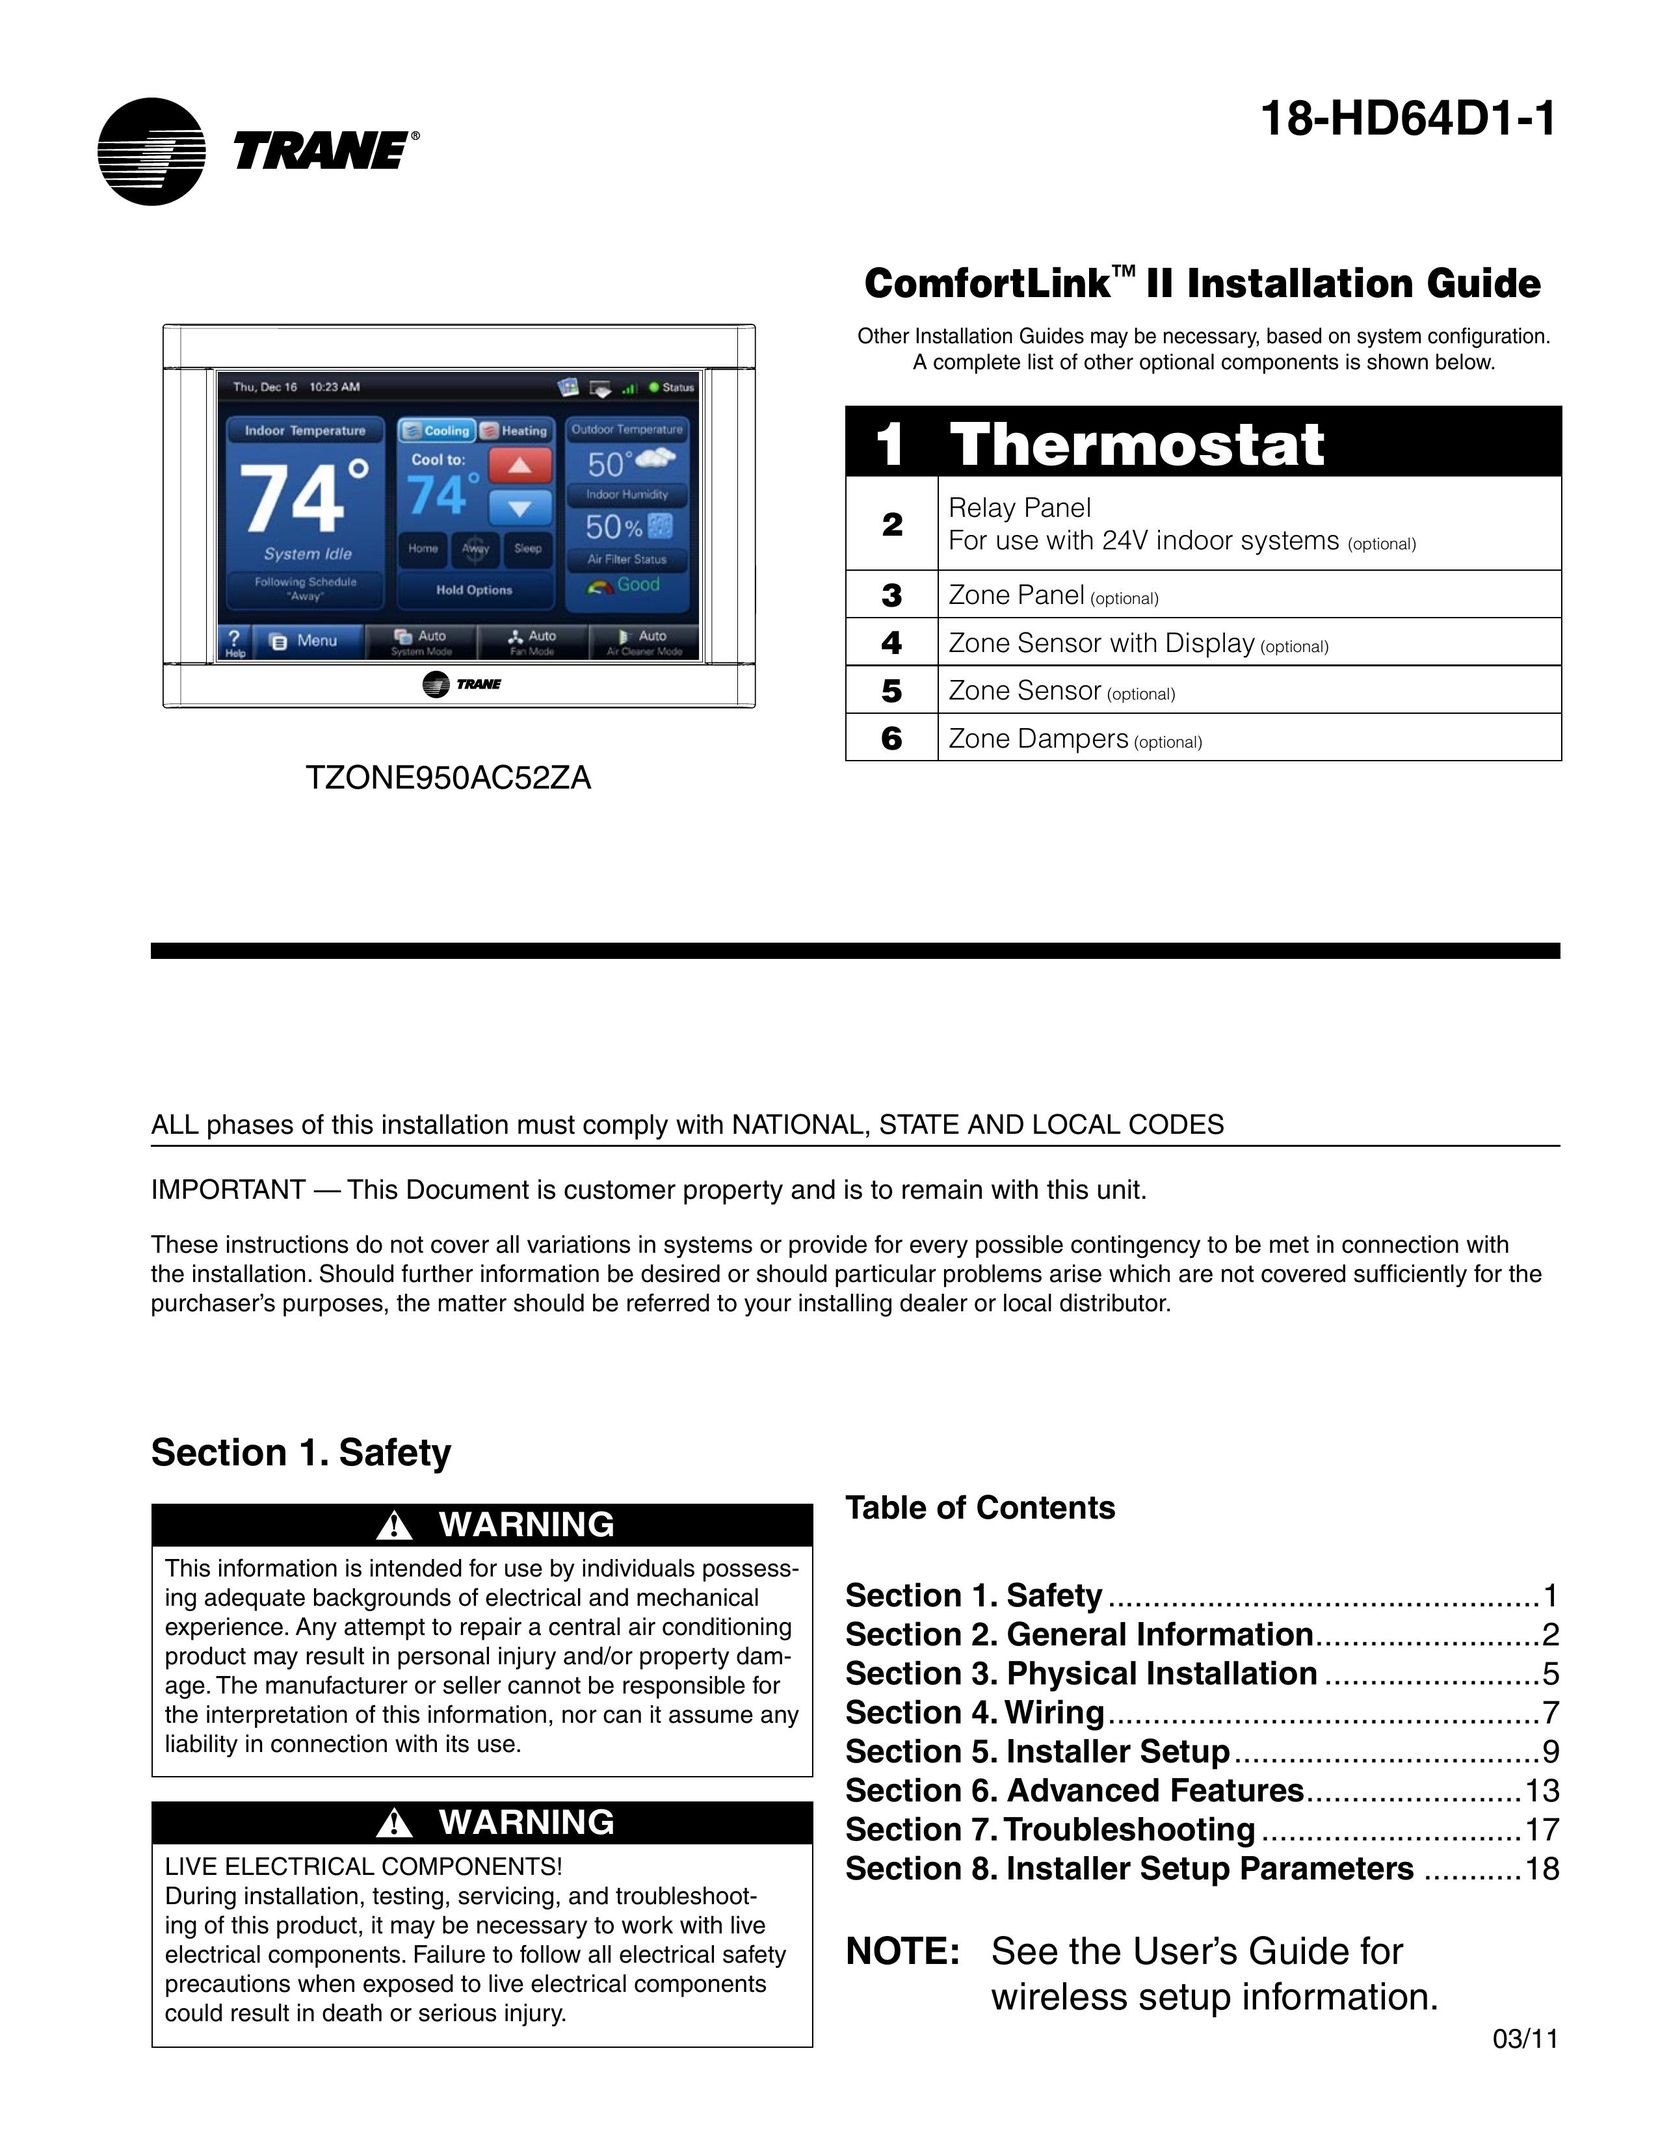 Trane 18-HD64D1-1 Thermostat User Manual